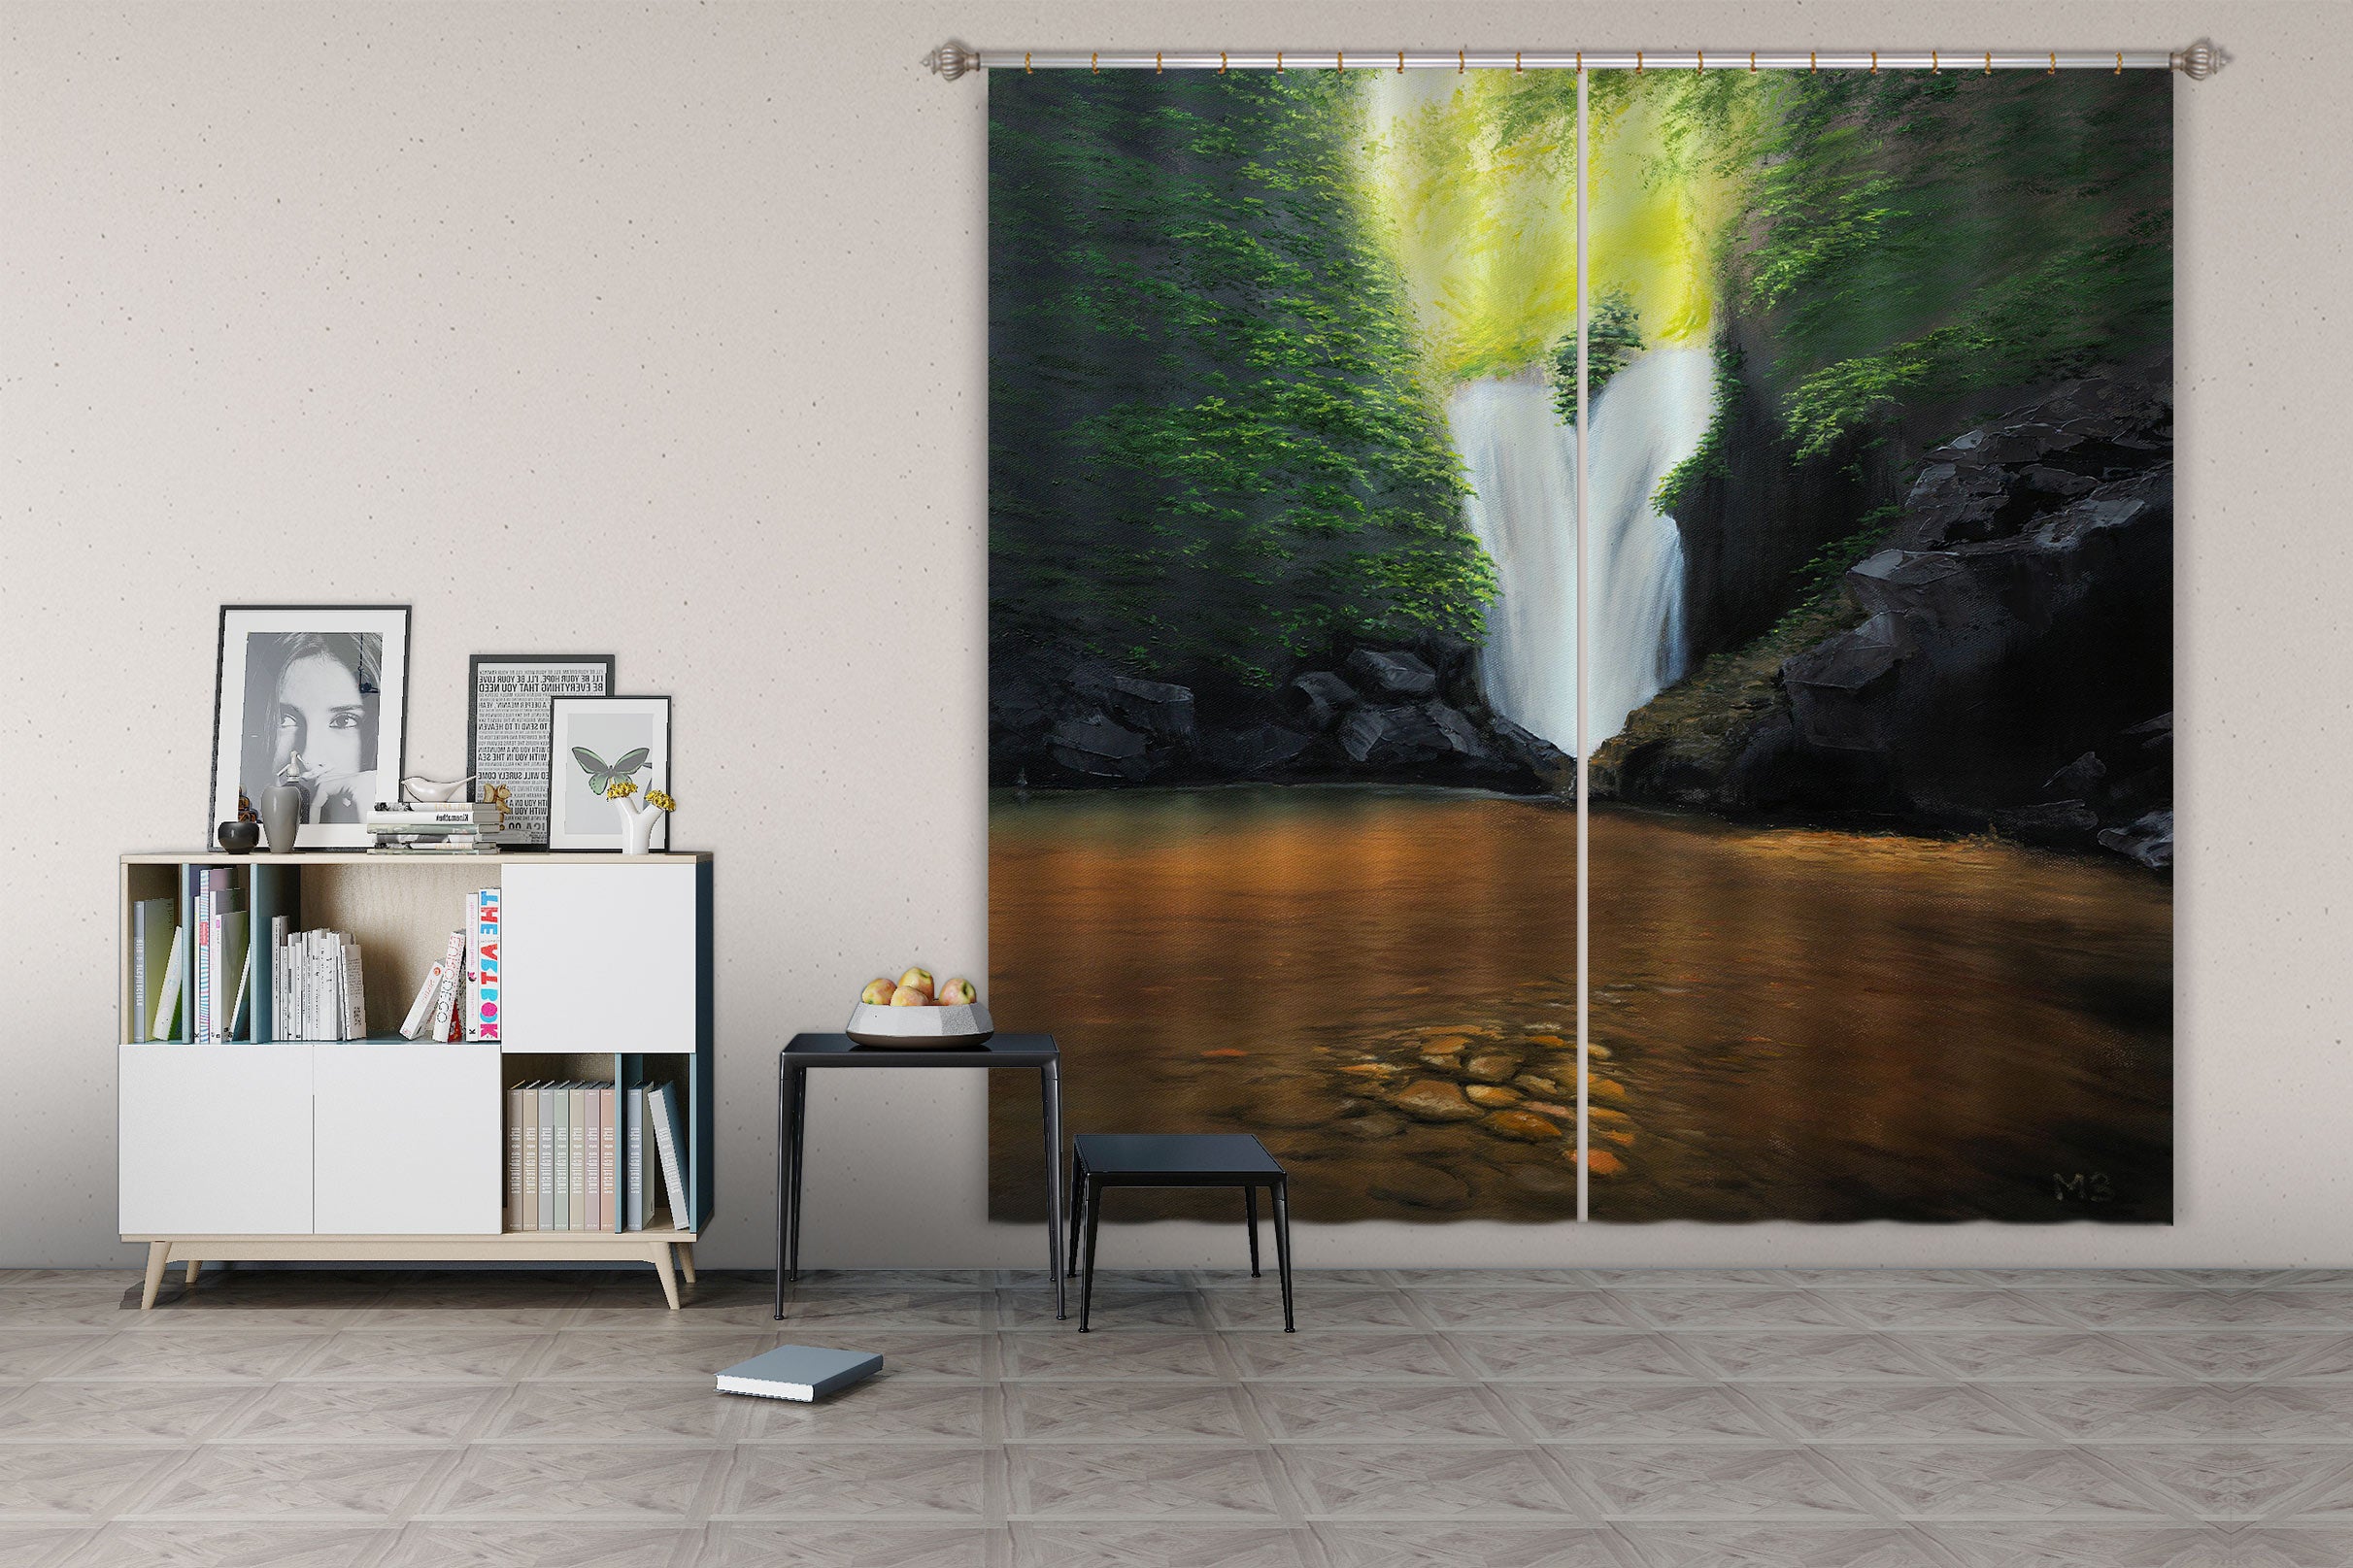 3D Grotto Flowing Water 1713 Marina Zotova Curtain Curtains Drapes